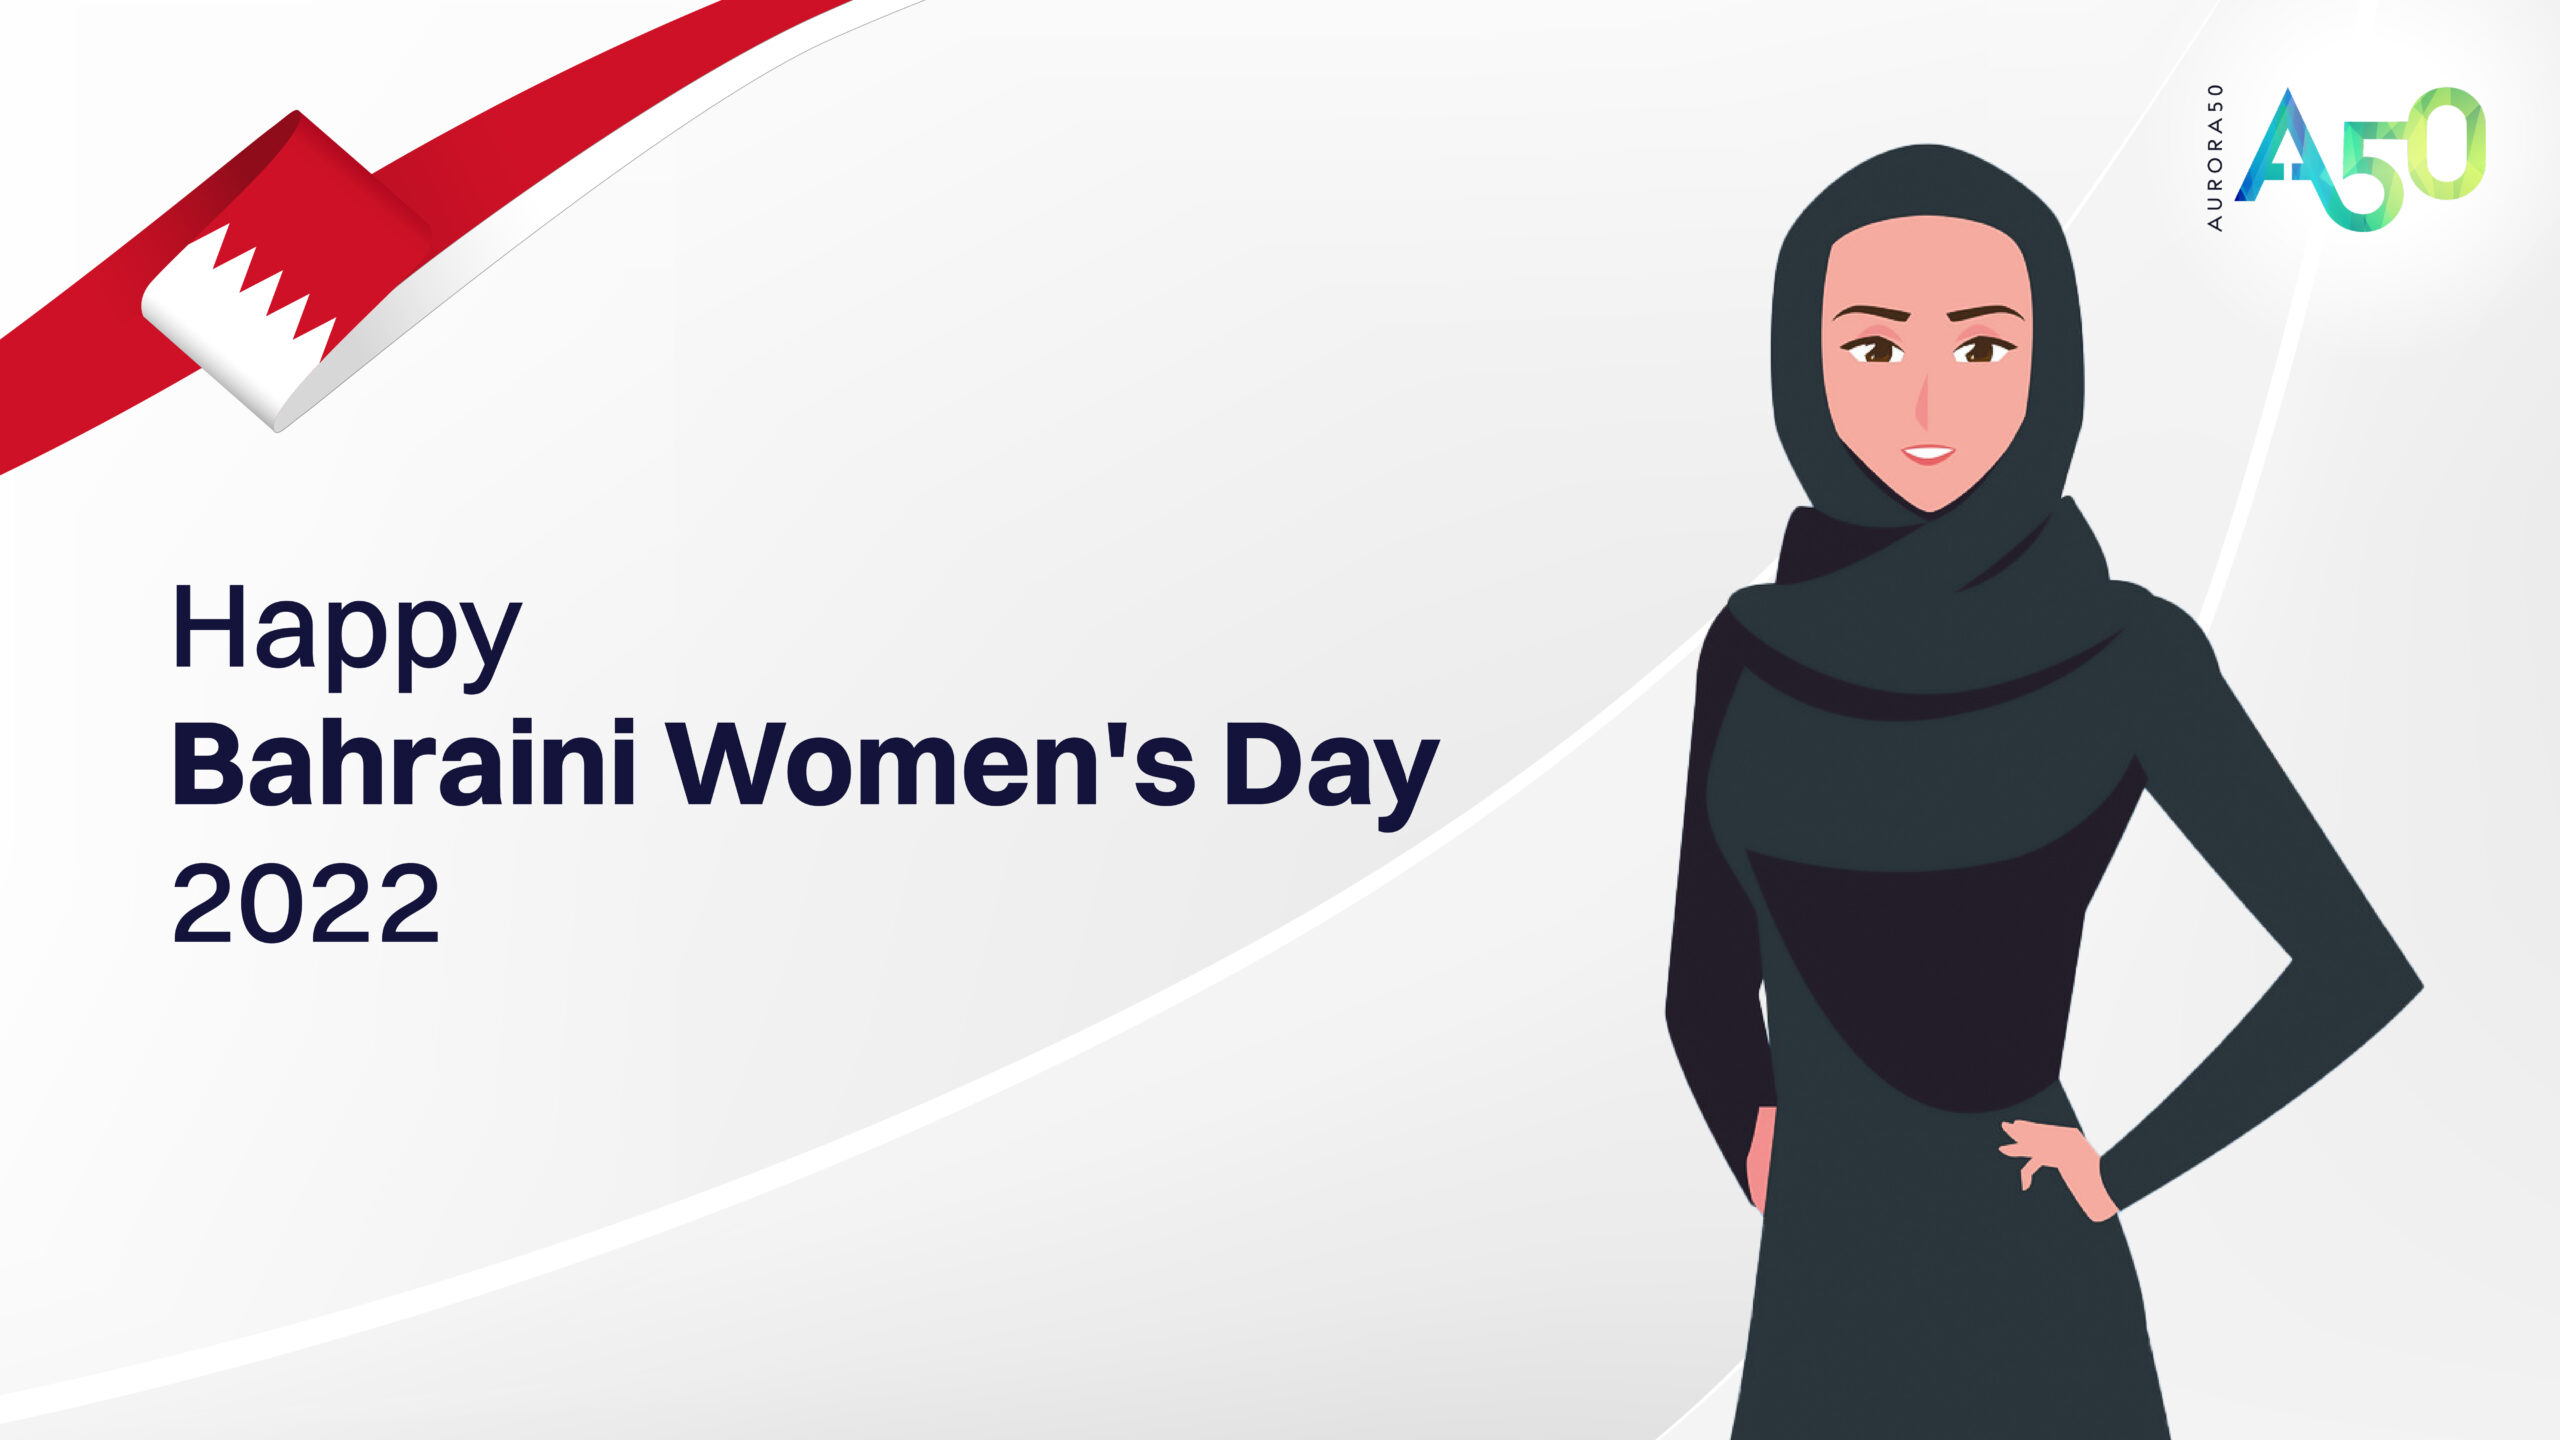 Illustration of Arab woman and Bahraini flag - text Happy Bahraini Women's Day 2022